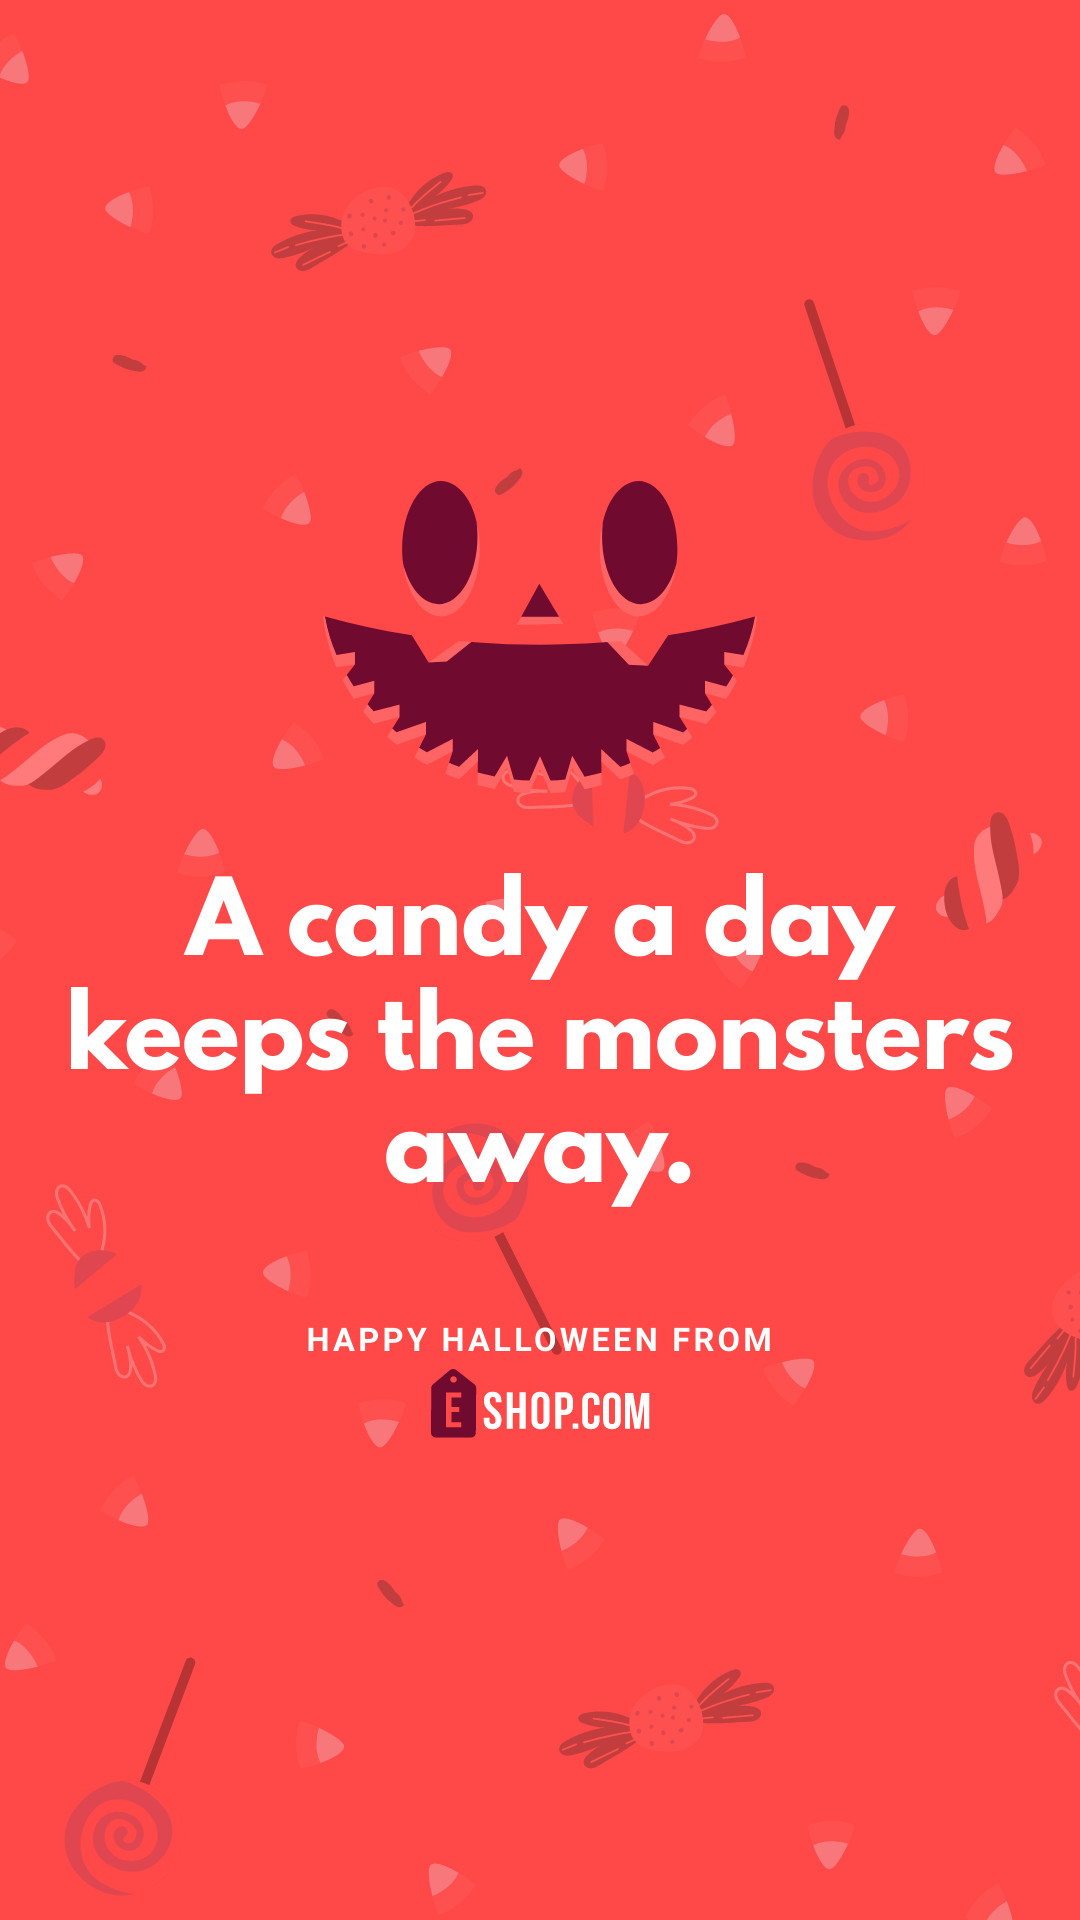 Eshop Candy a Day Halloween 